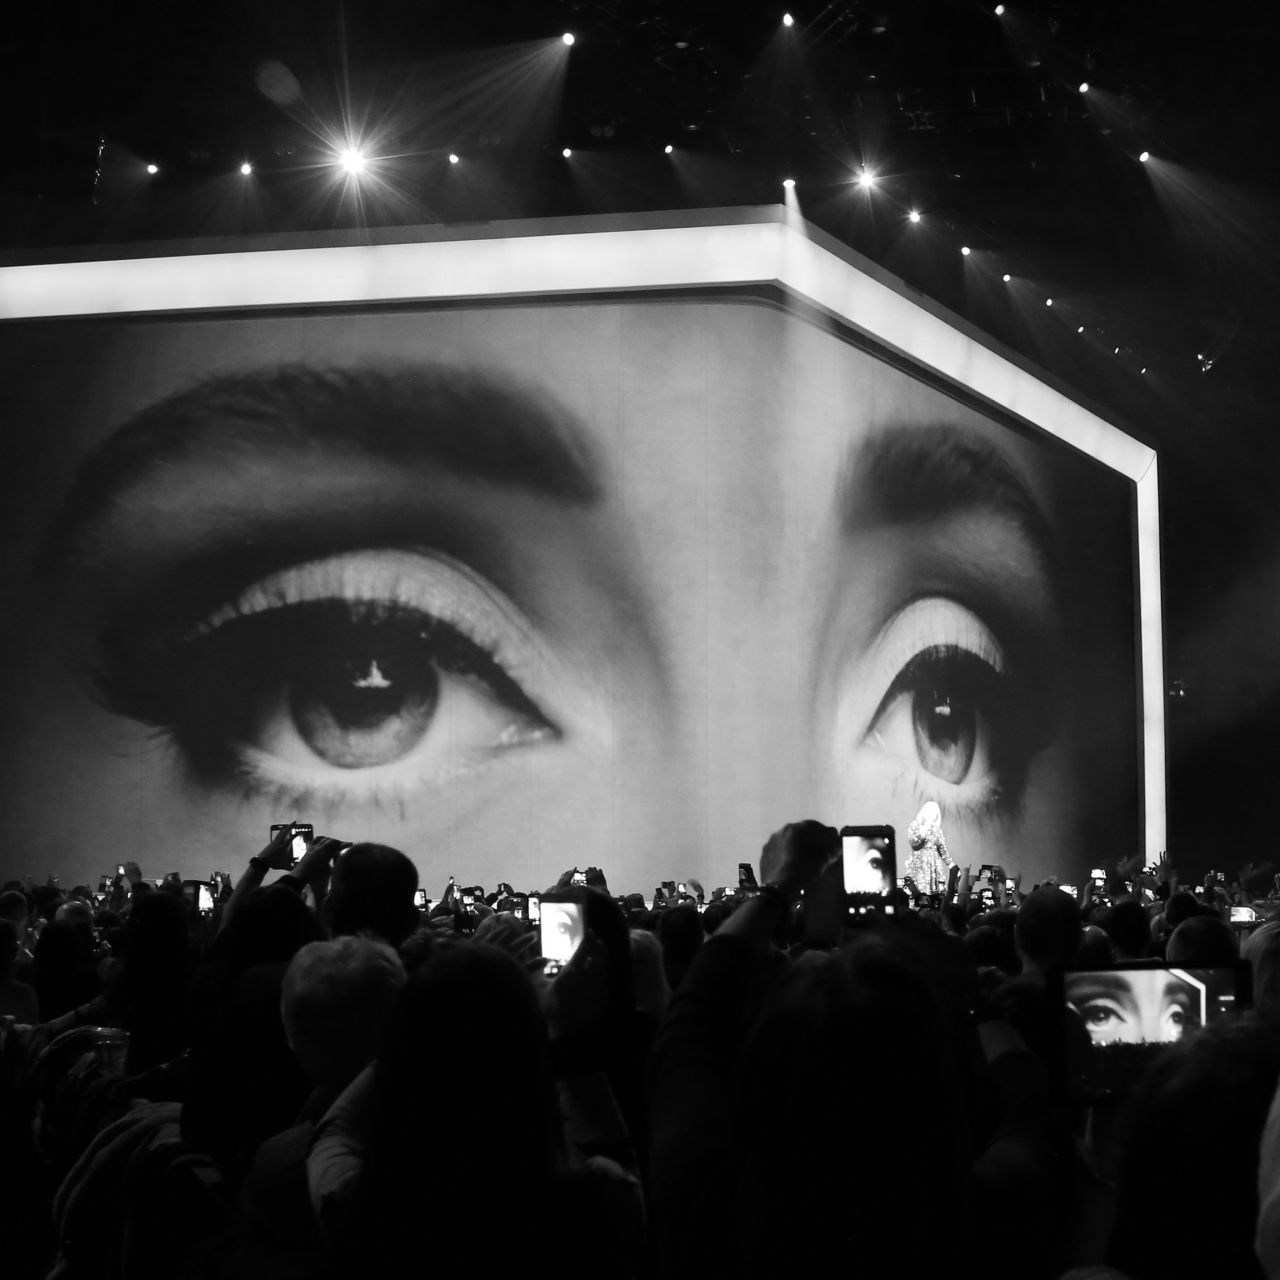 Es Devlin's stage design for Adele's World Live tour (2016)